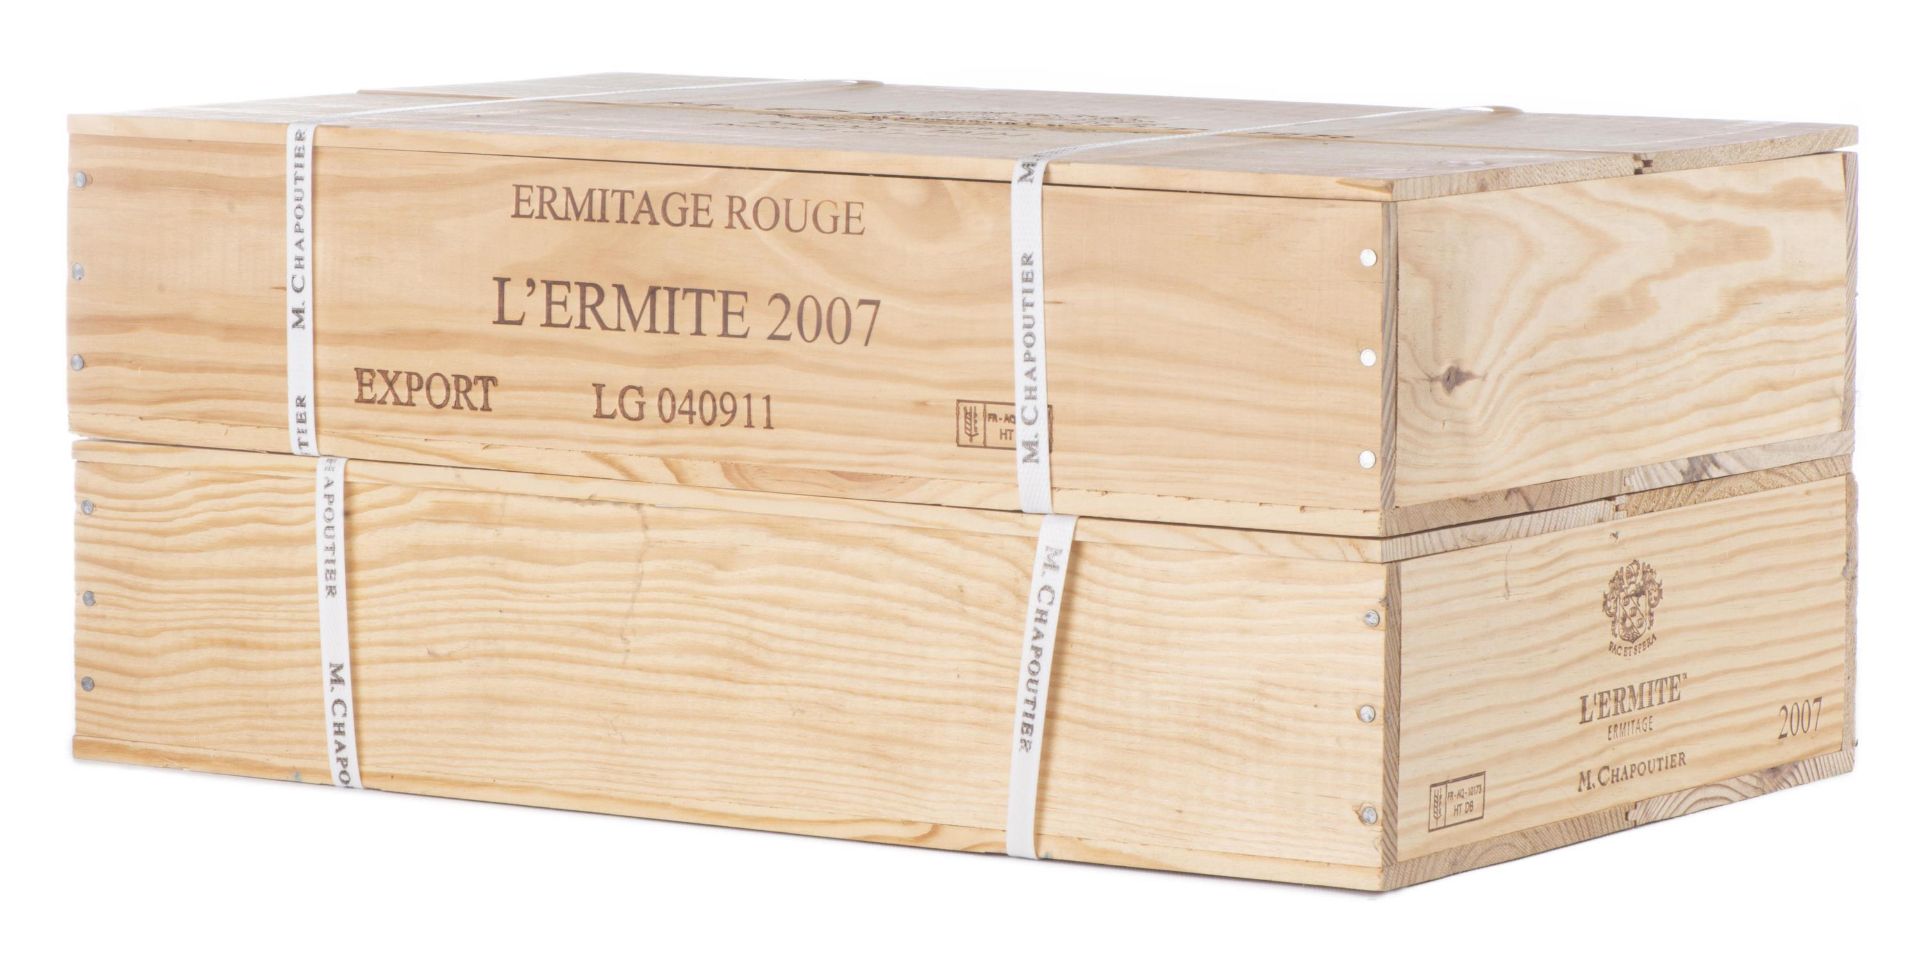 M. Chapoutier, Ermitage «L’Ermite», 2007 - Image 4 of 4